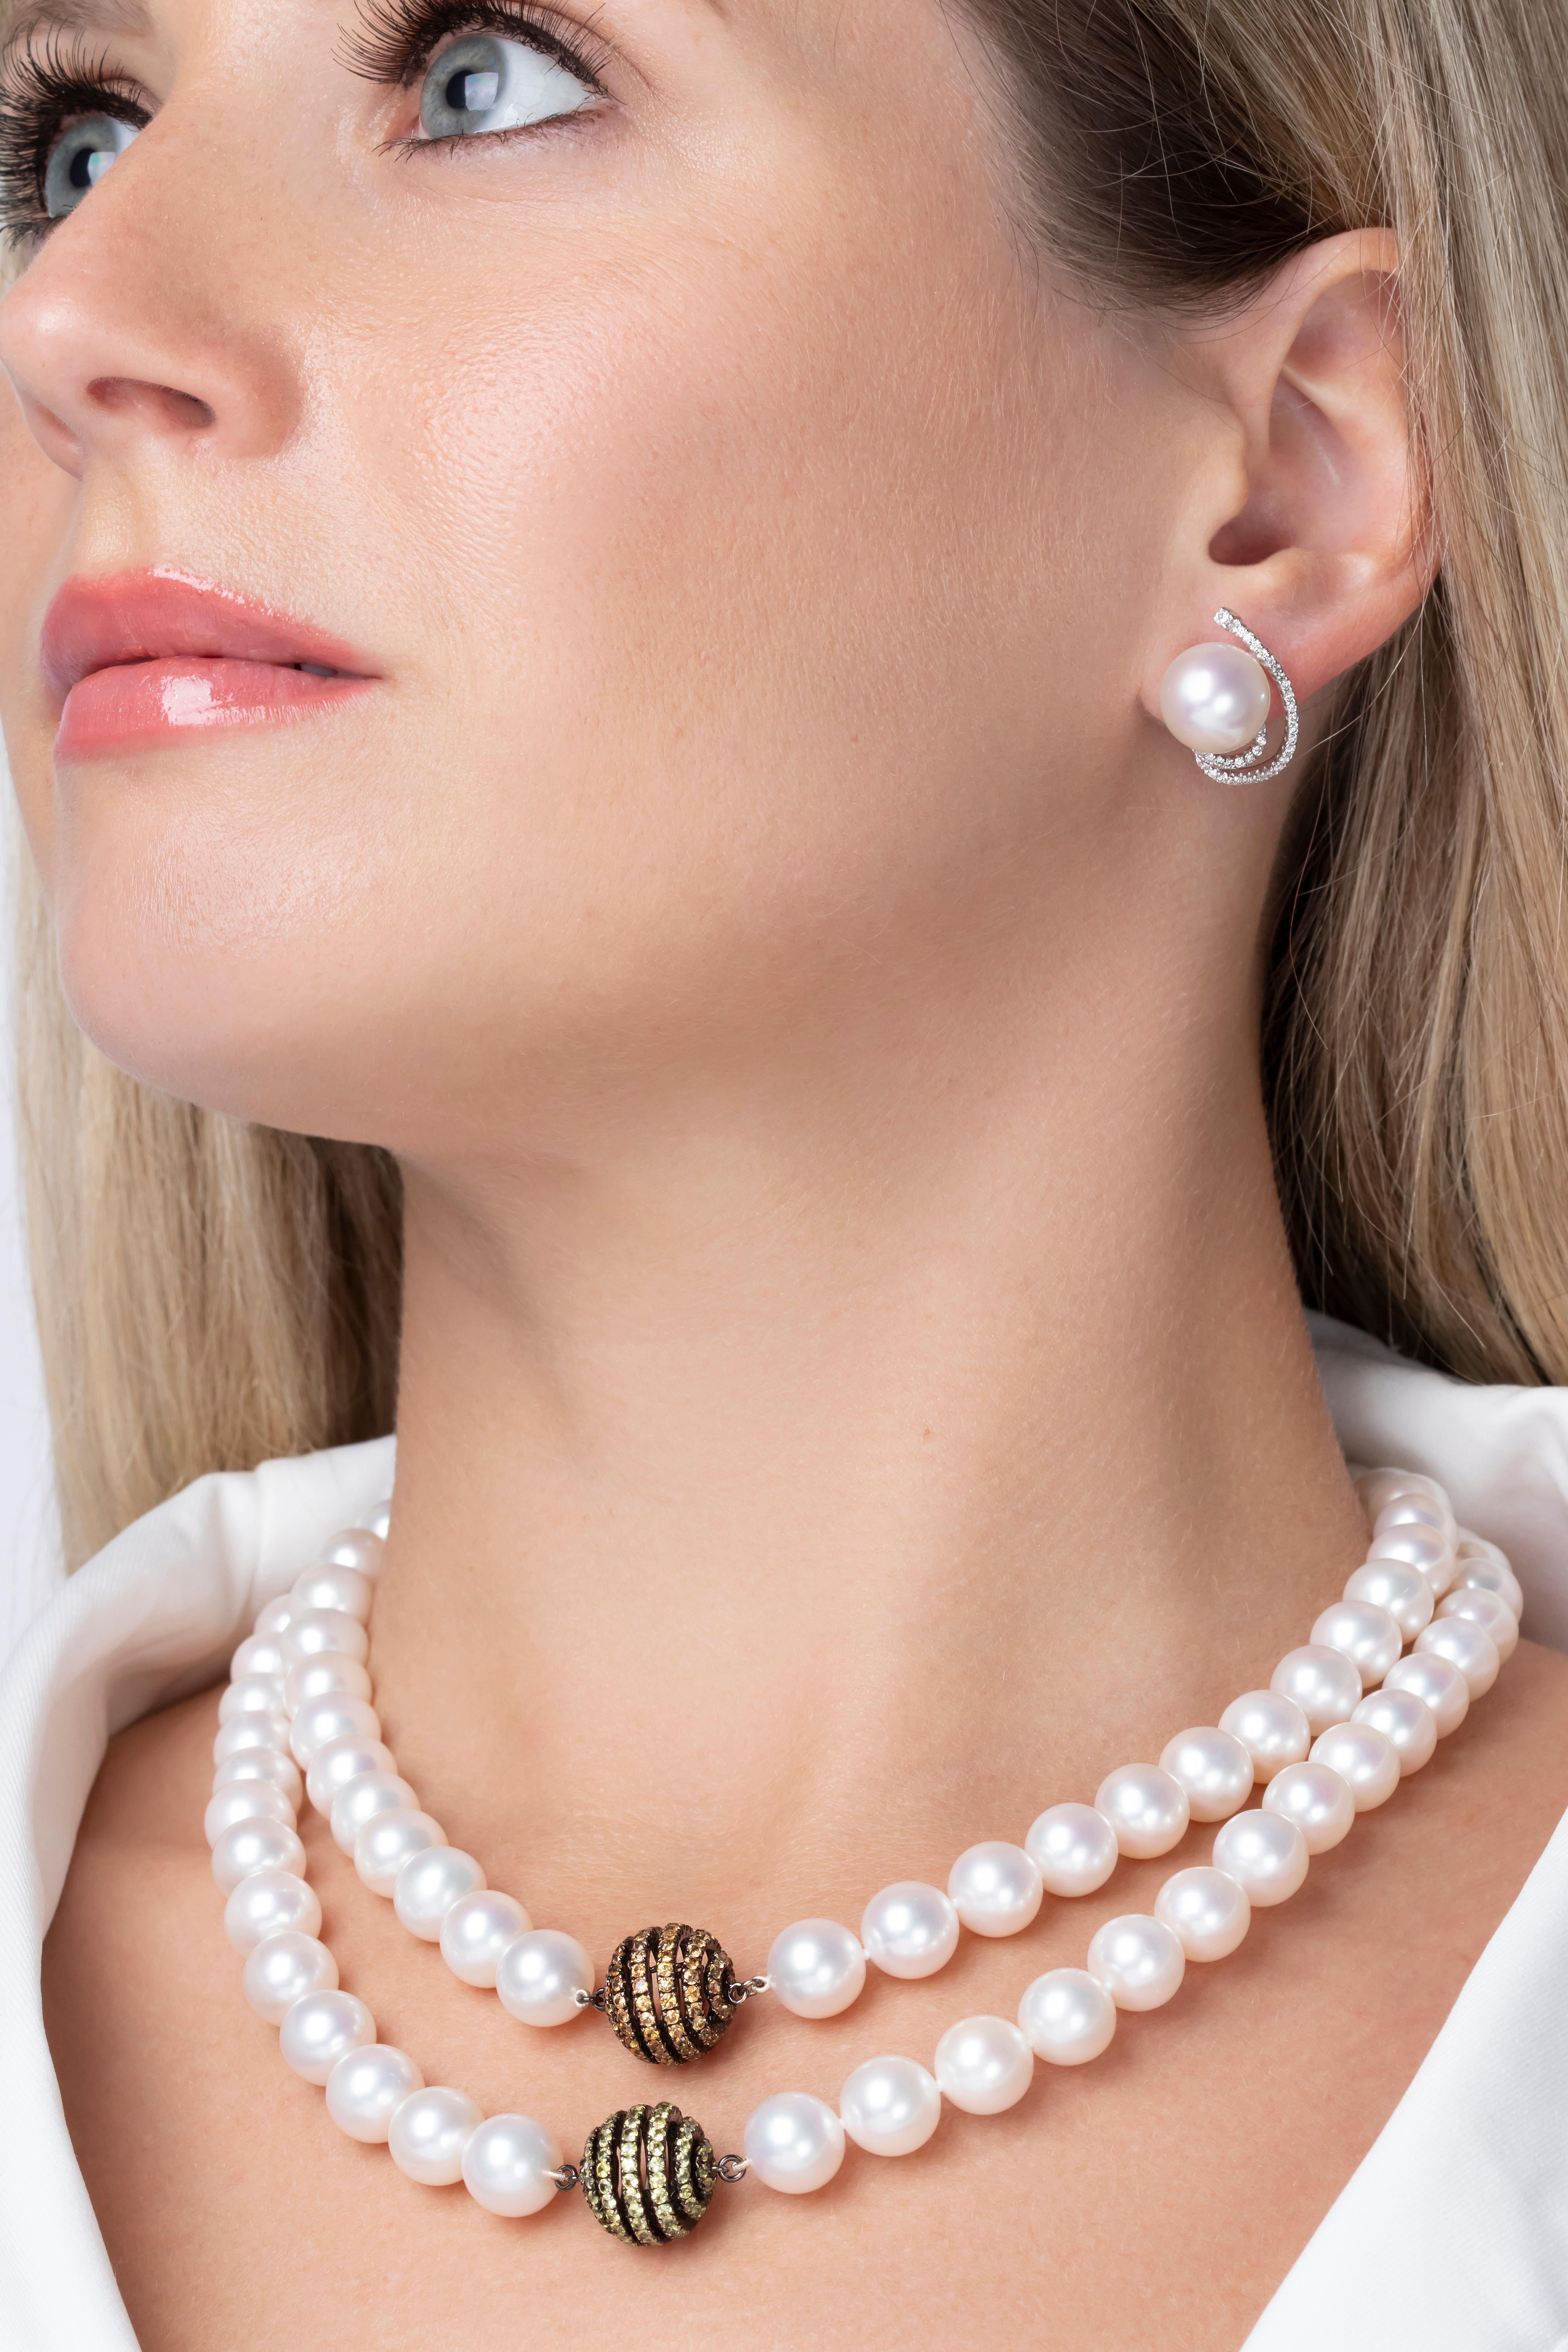 Women's Yoko London South Sea Pearl and Diamond Earrings in 18 Karat White Gold